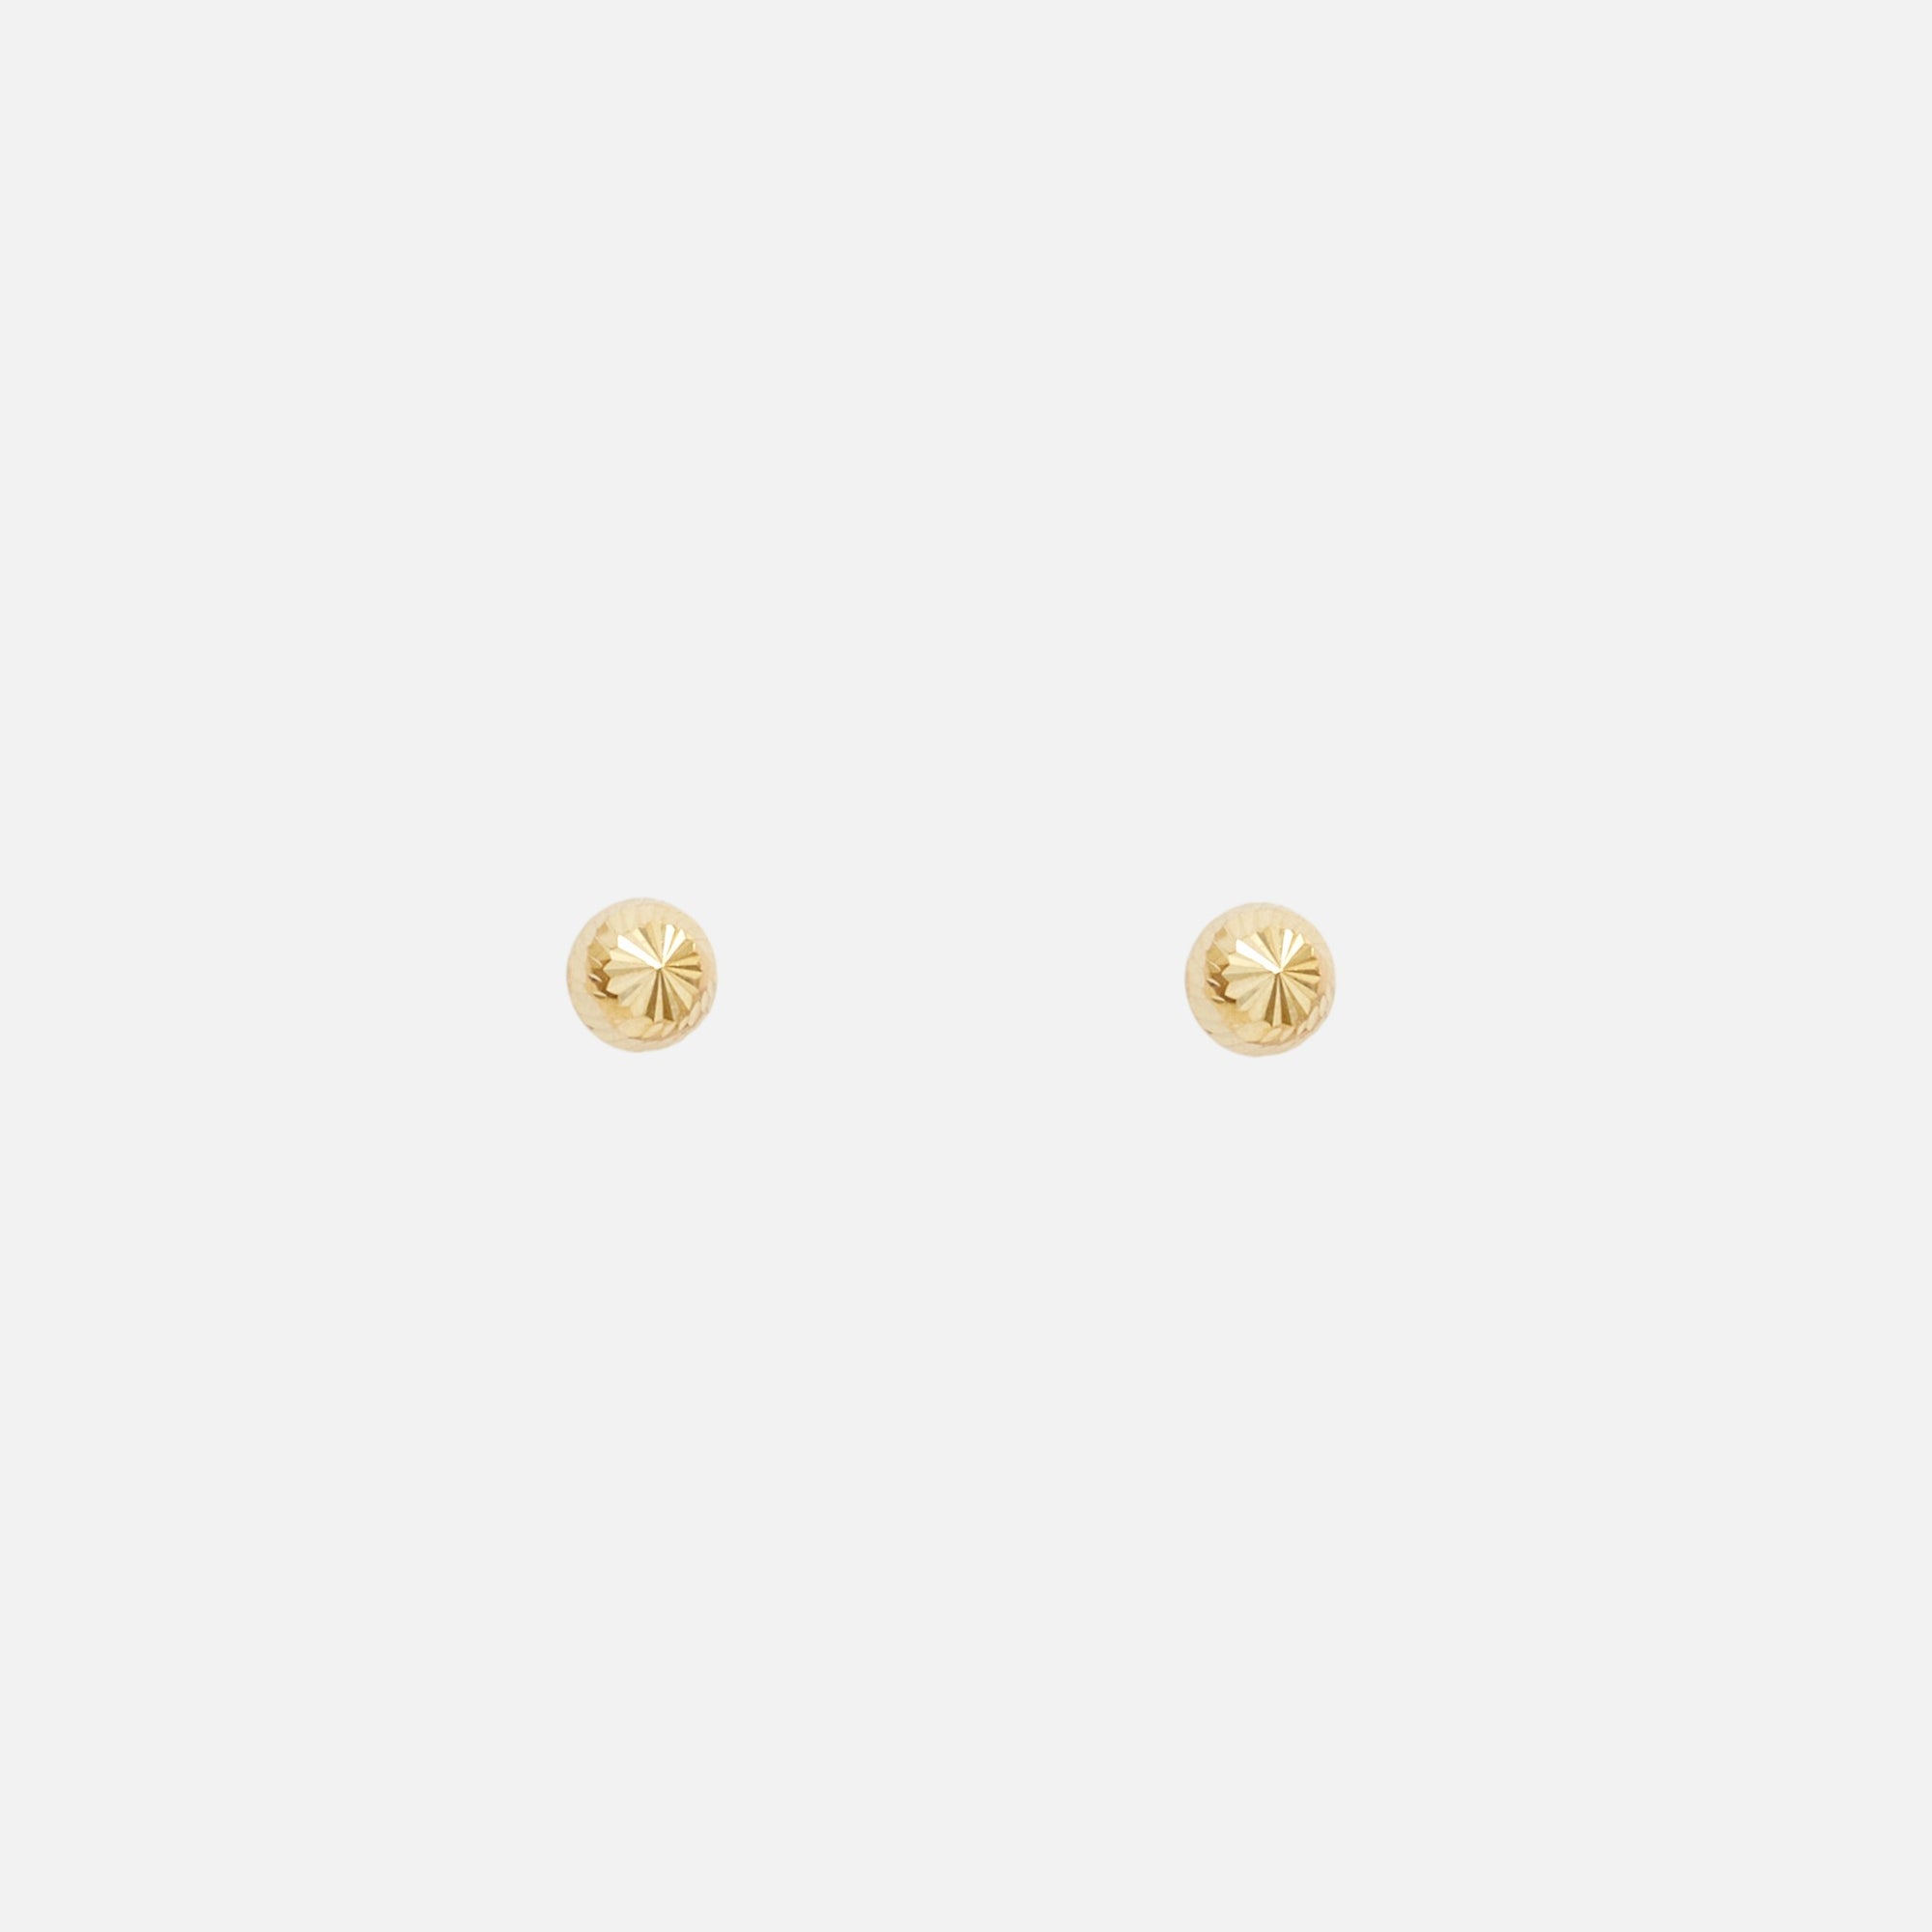 10k yellow gold earrings textured ball